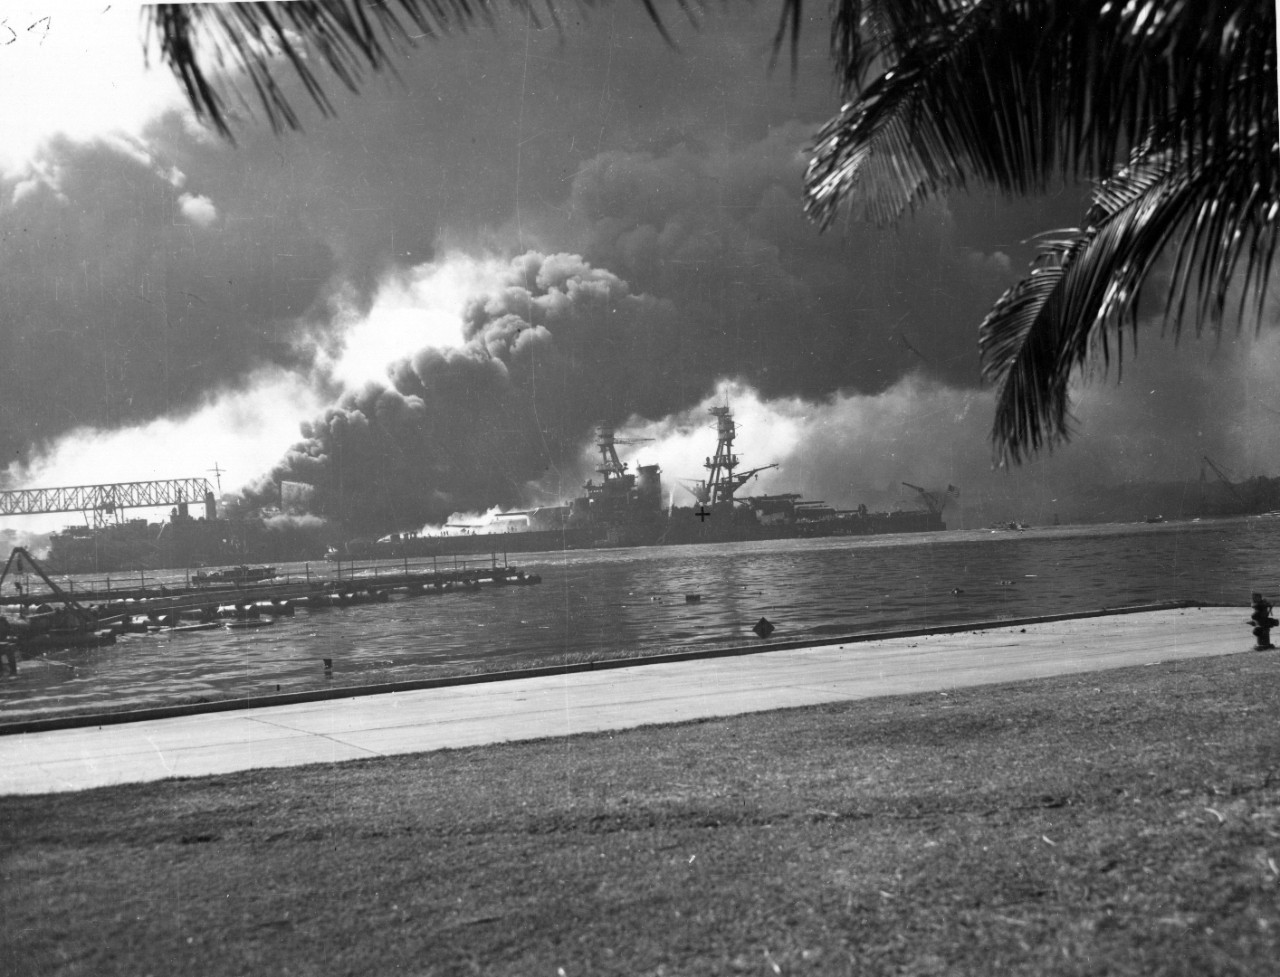 File:USS SHAW exploding Pearl Harbor Nara 80-G-16871 2.jpg - Wikipedia